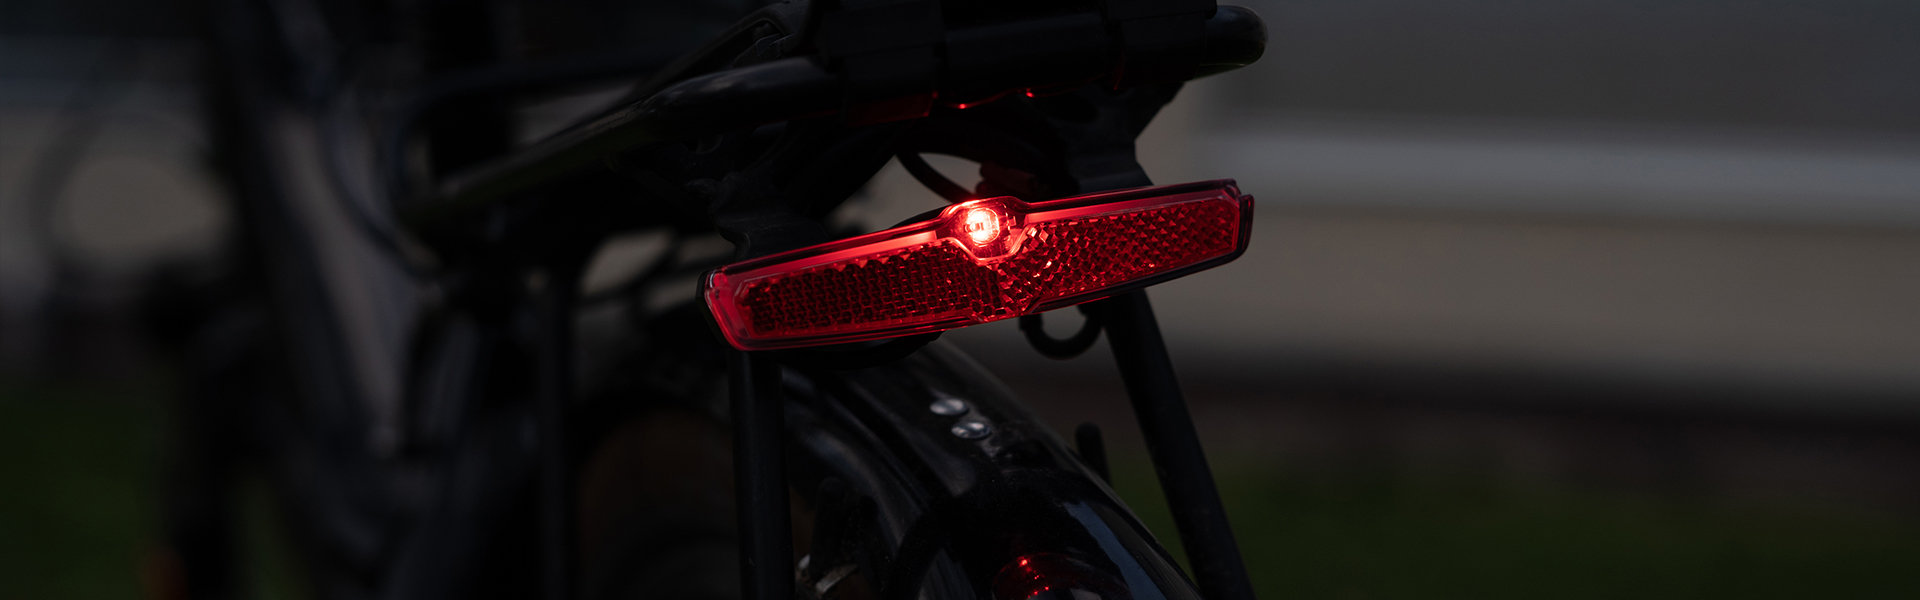 Sate-lite 500 lumen USB rechargeable bike light eletric bike front light Cree LED waterproof